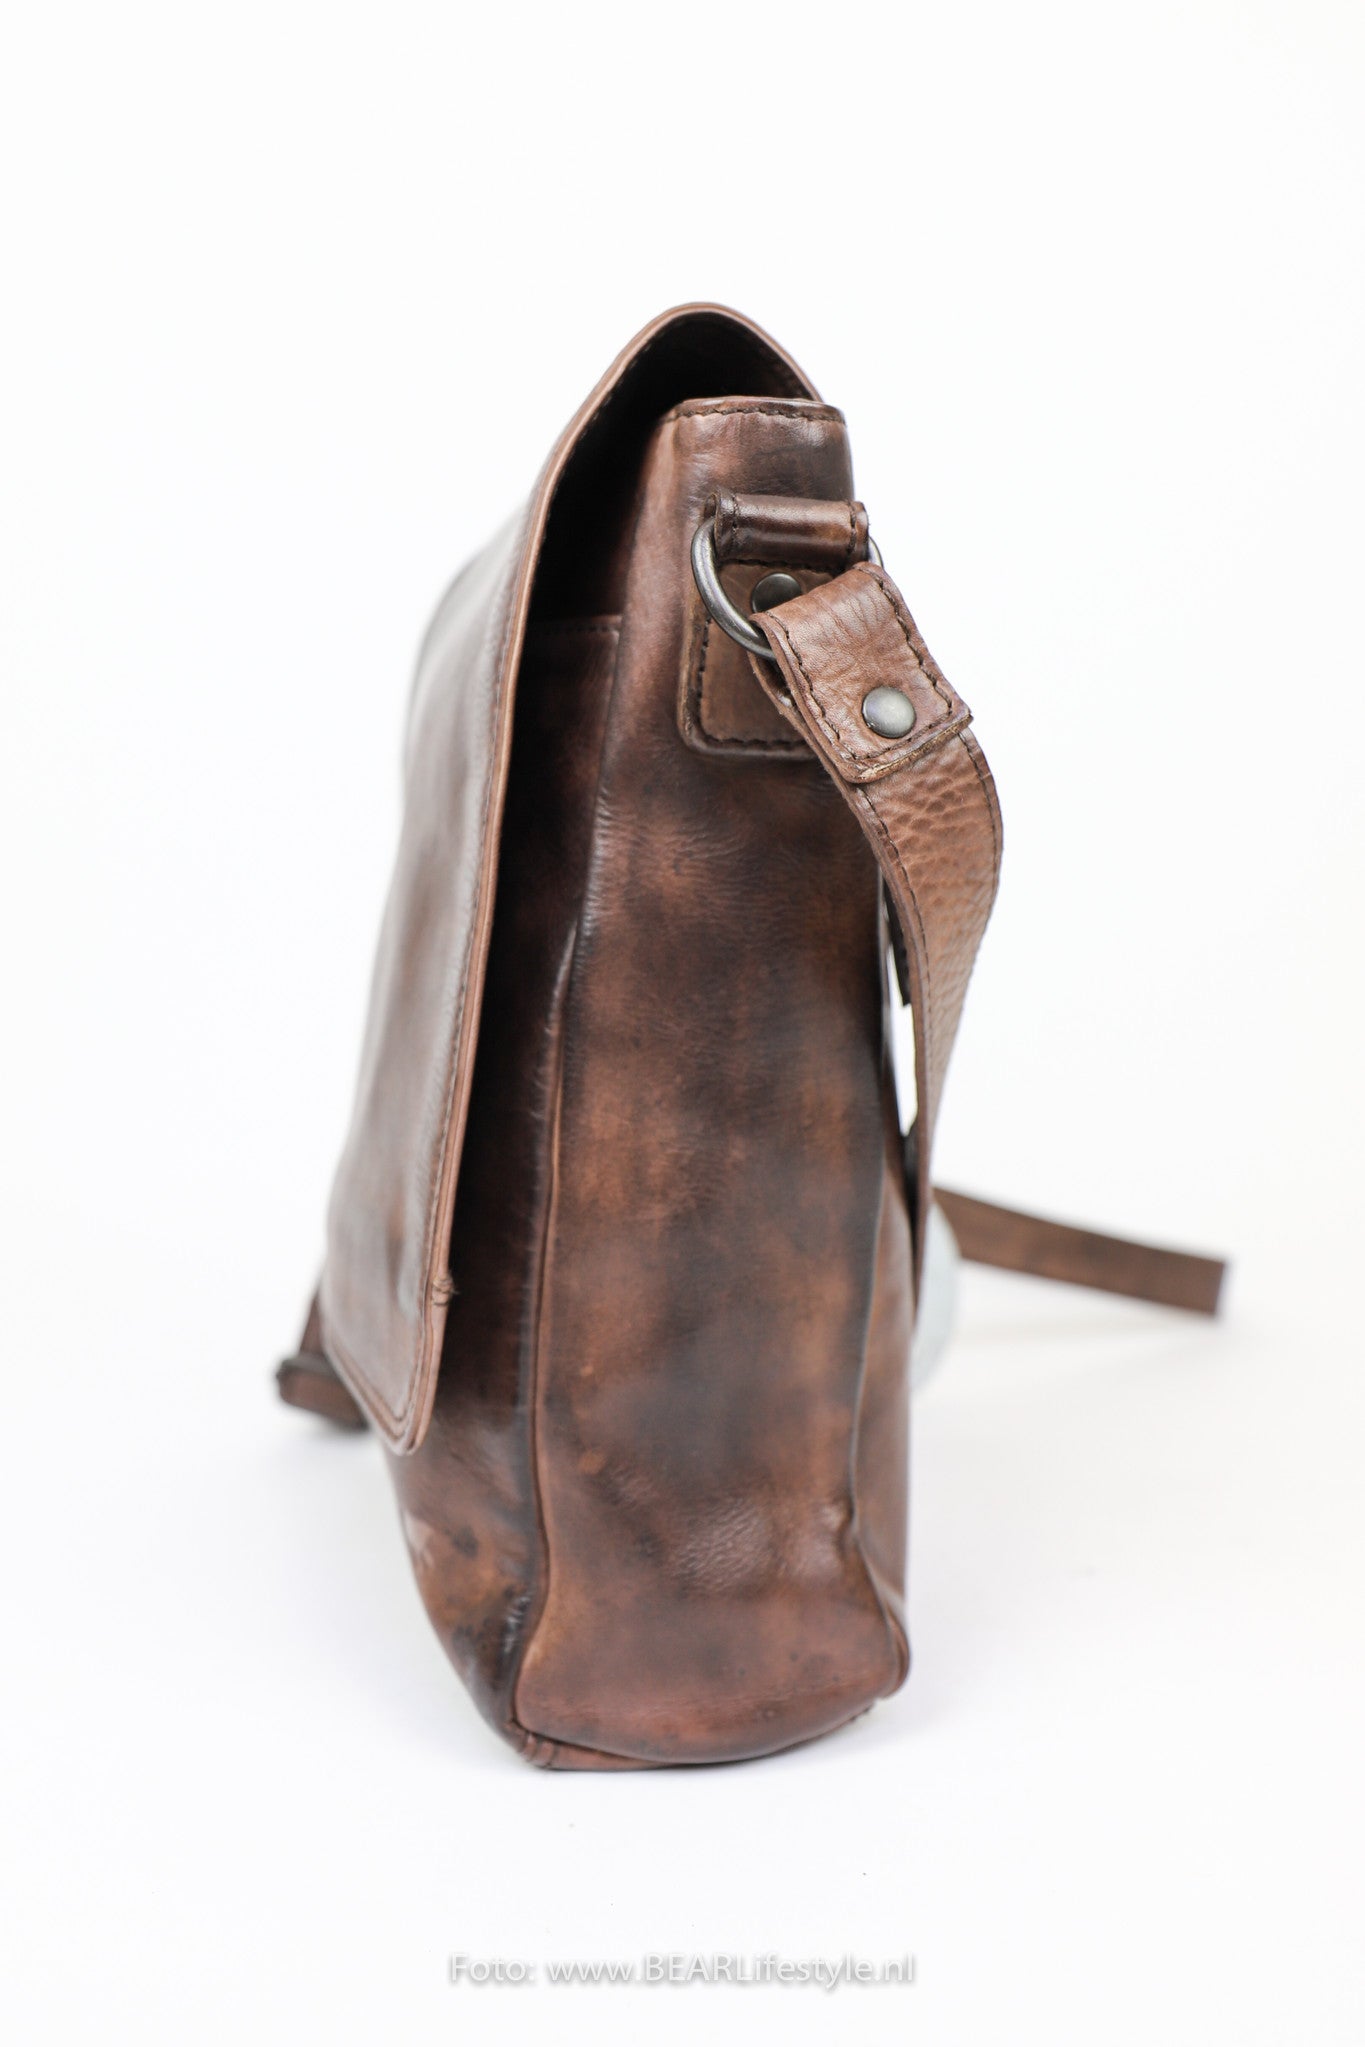 Shoulder bag 'Dirk' dark brown - CL 40025